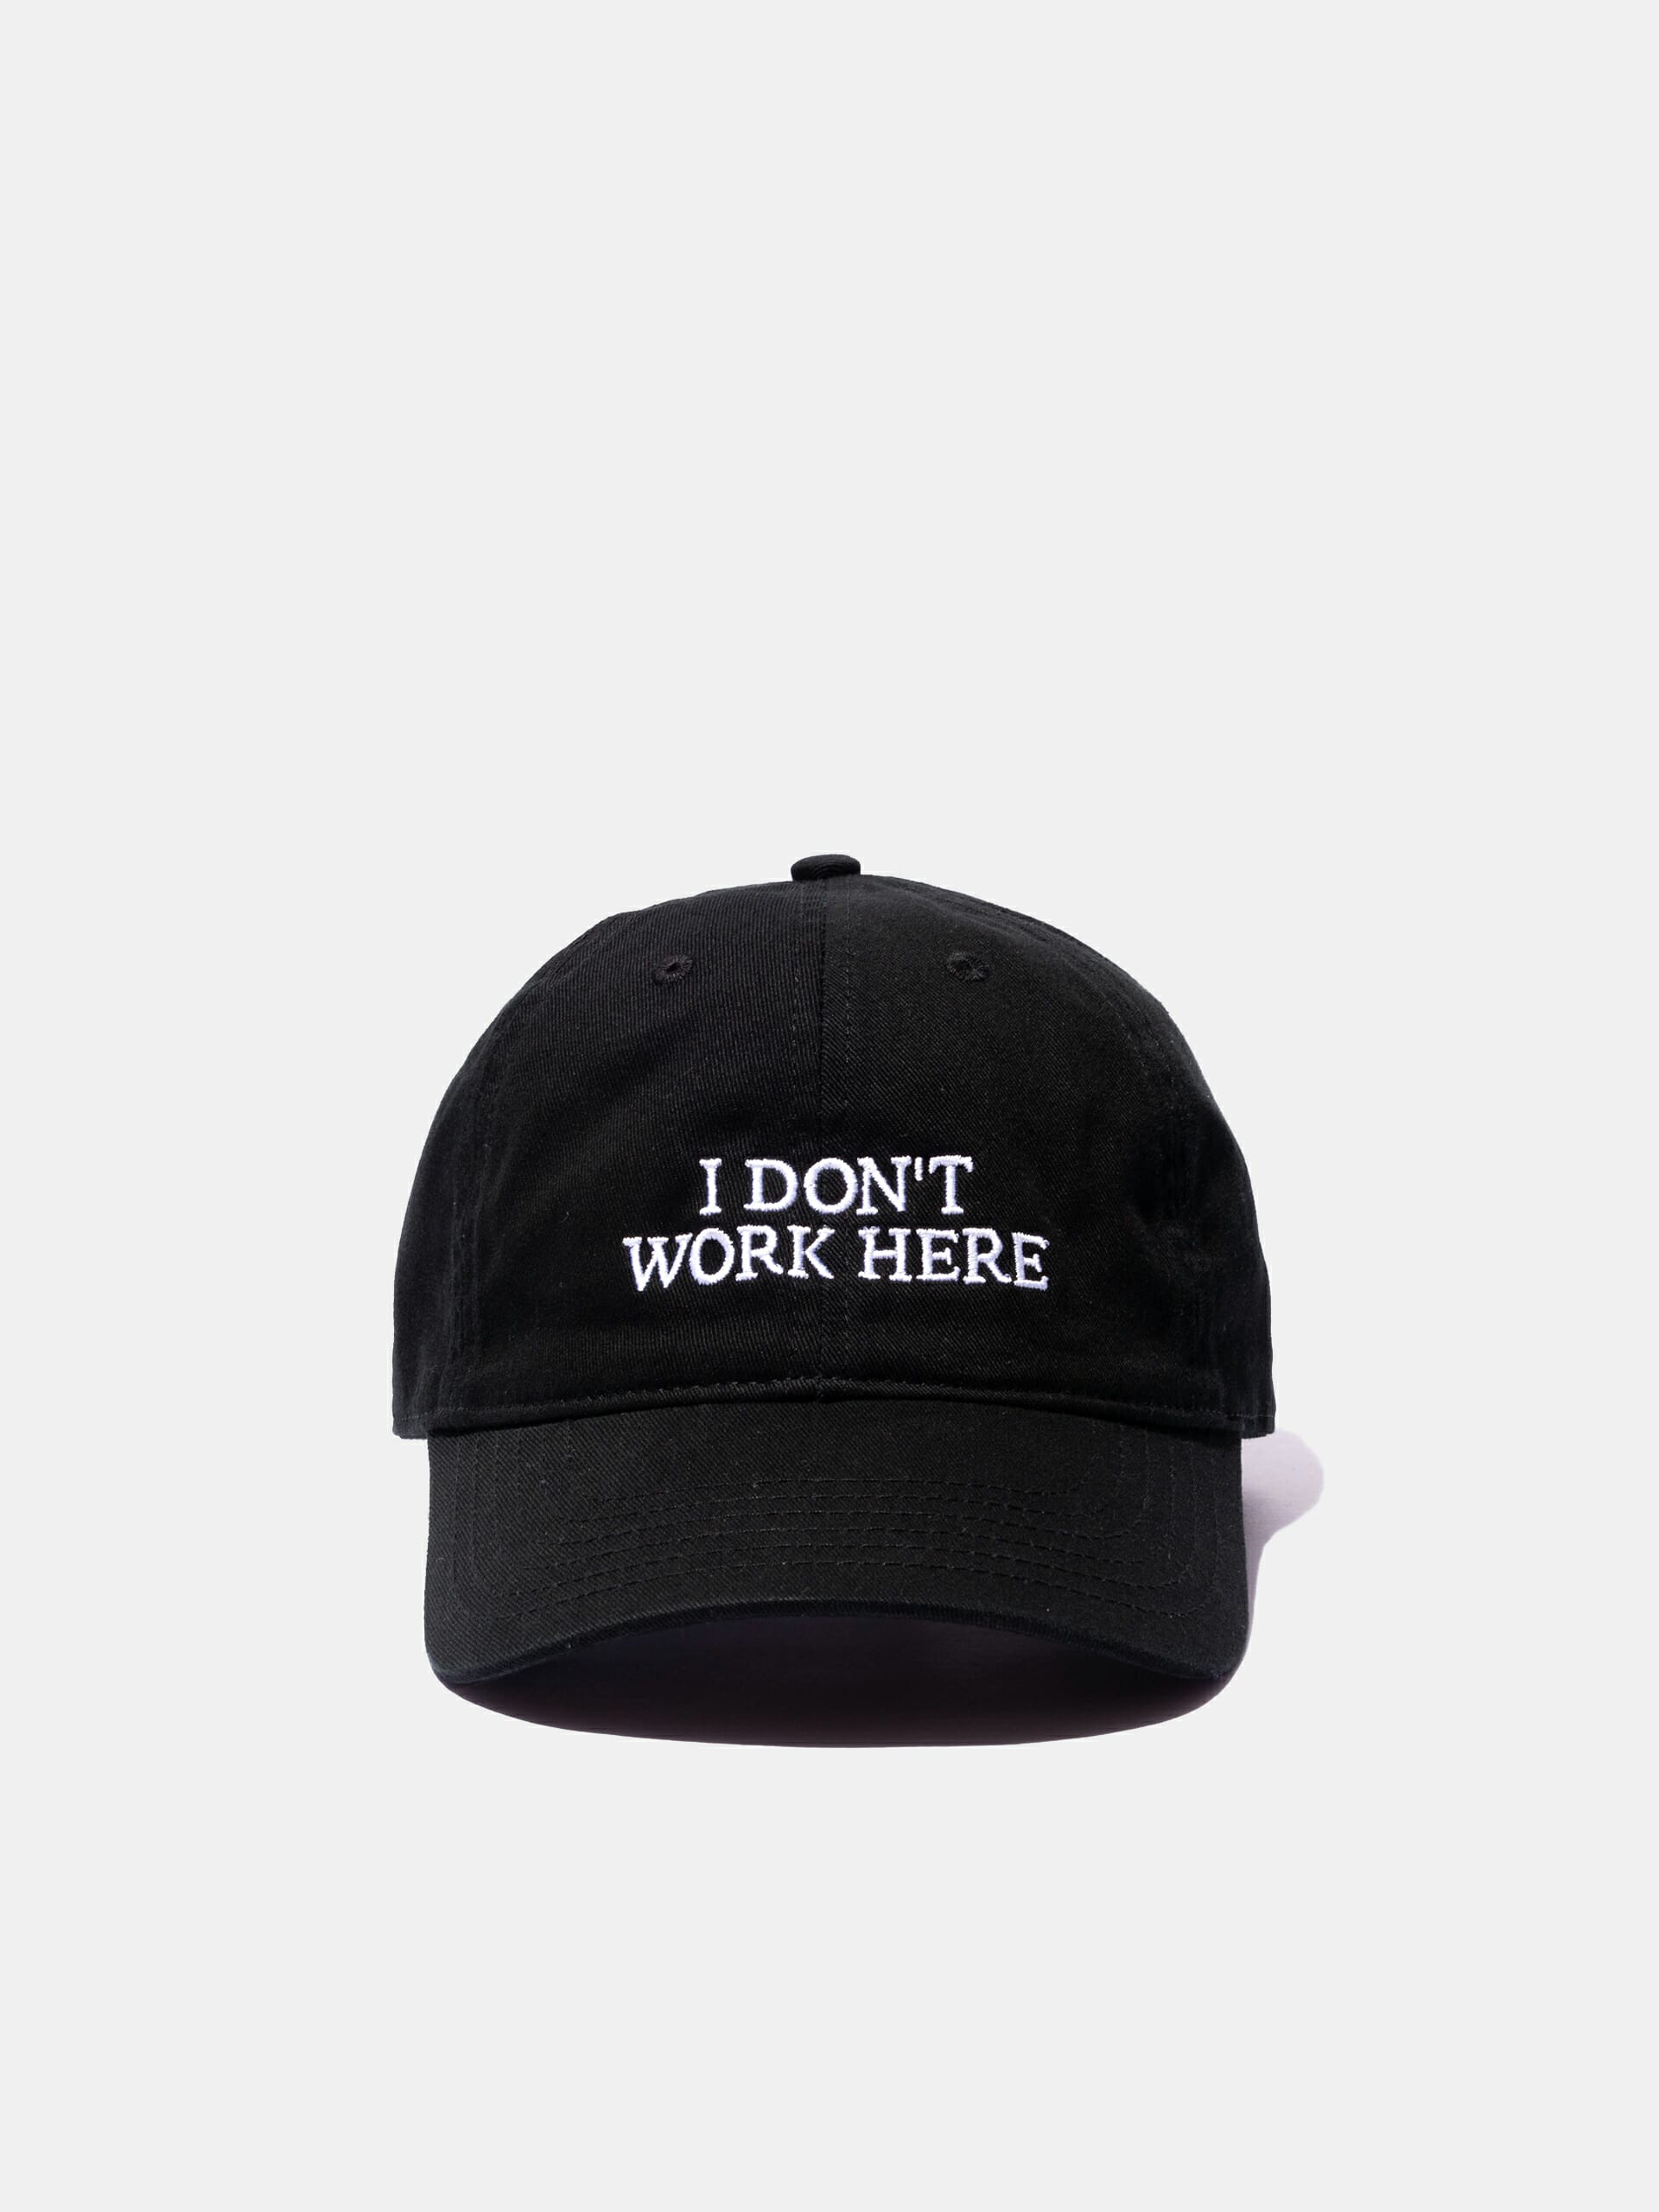 IDEA SORRY / I DON'T WORK HERE HAT / BLACK - NIGHTHAWKS